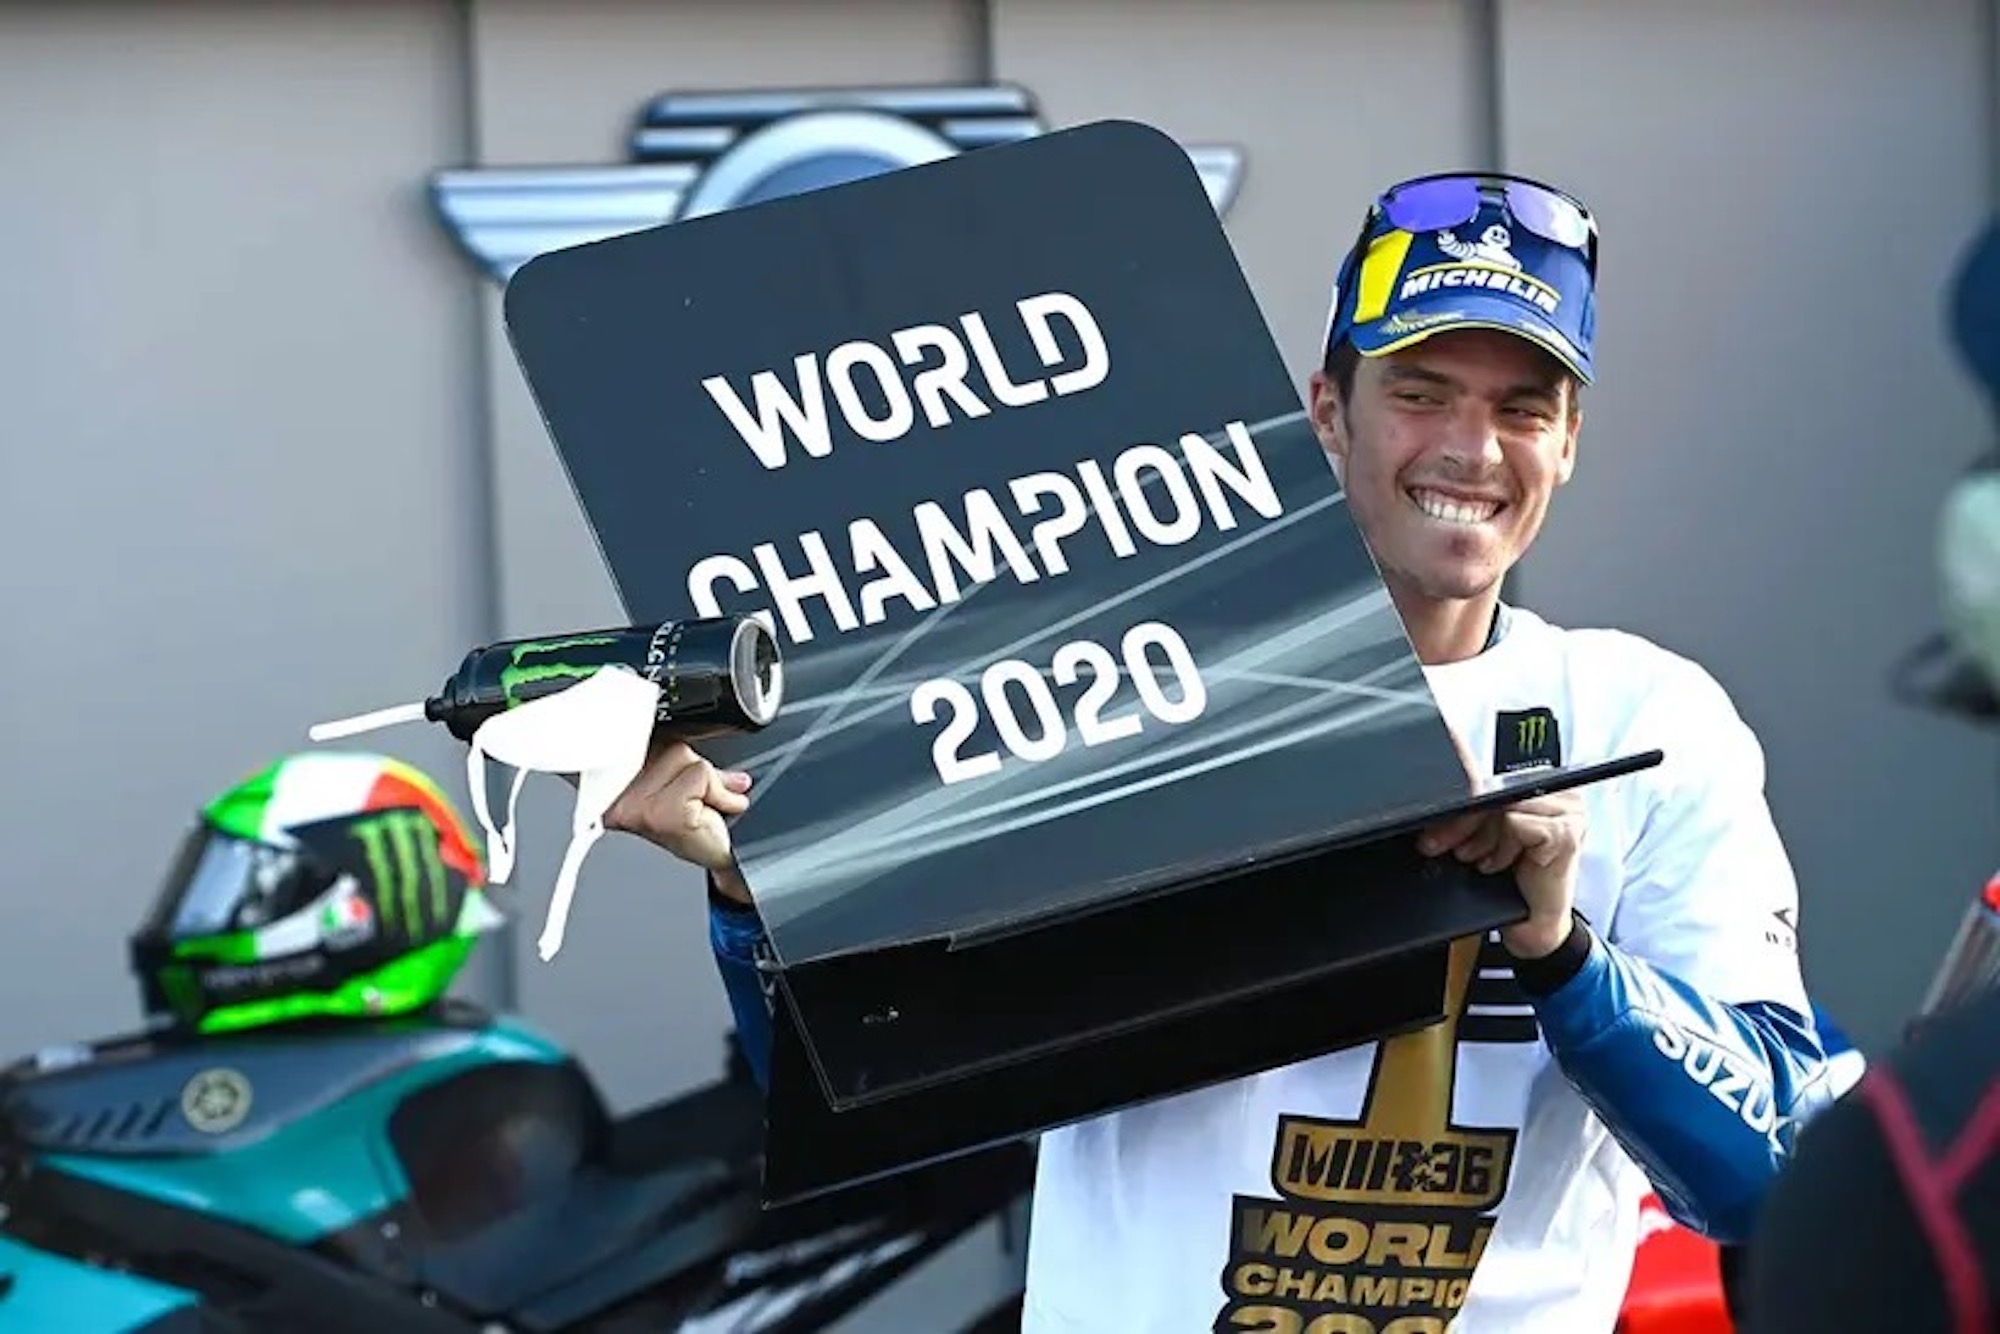 Suzuki's win as World Endurance Champion. Media sourced from MCN.